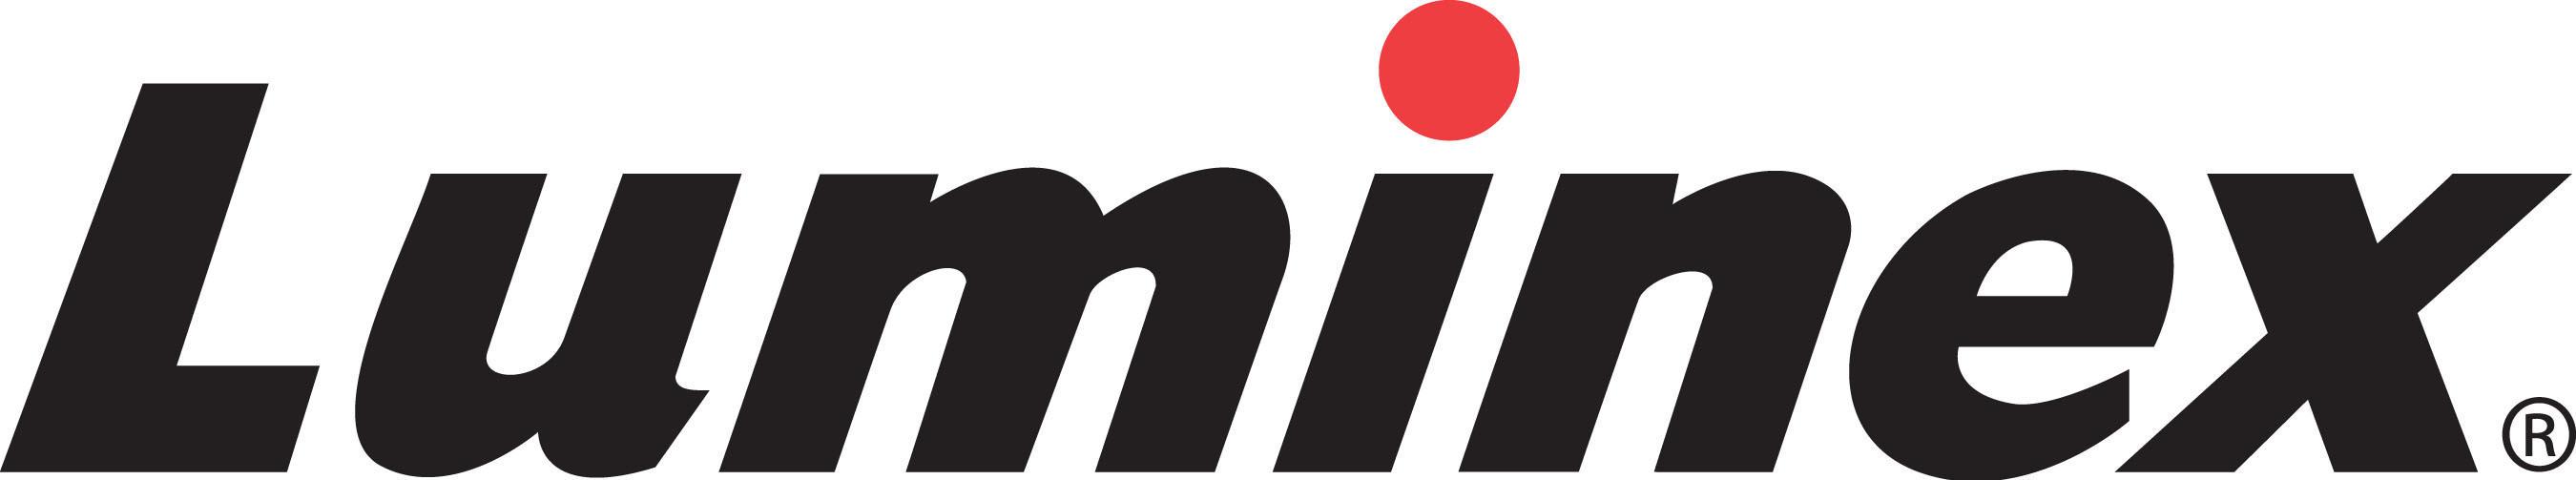 Luminex logo. (PRNewsFoto/LUMINEX CORP.)